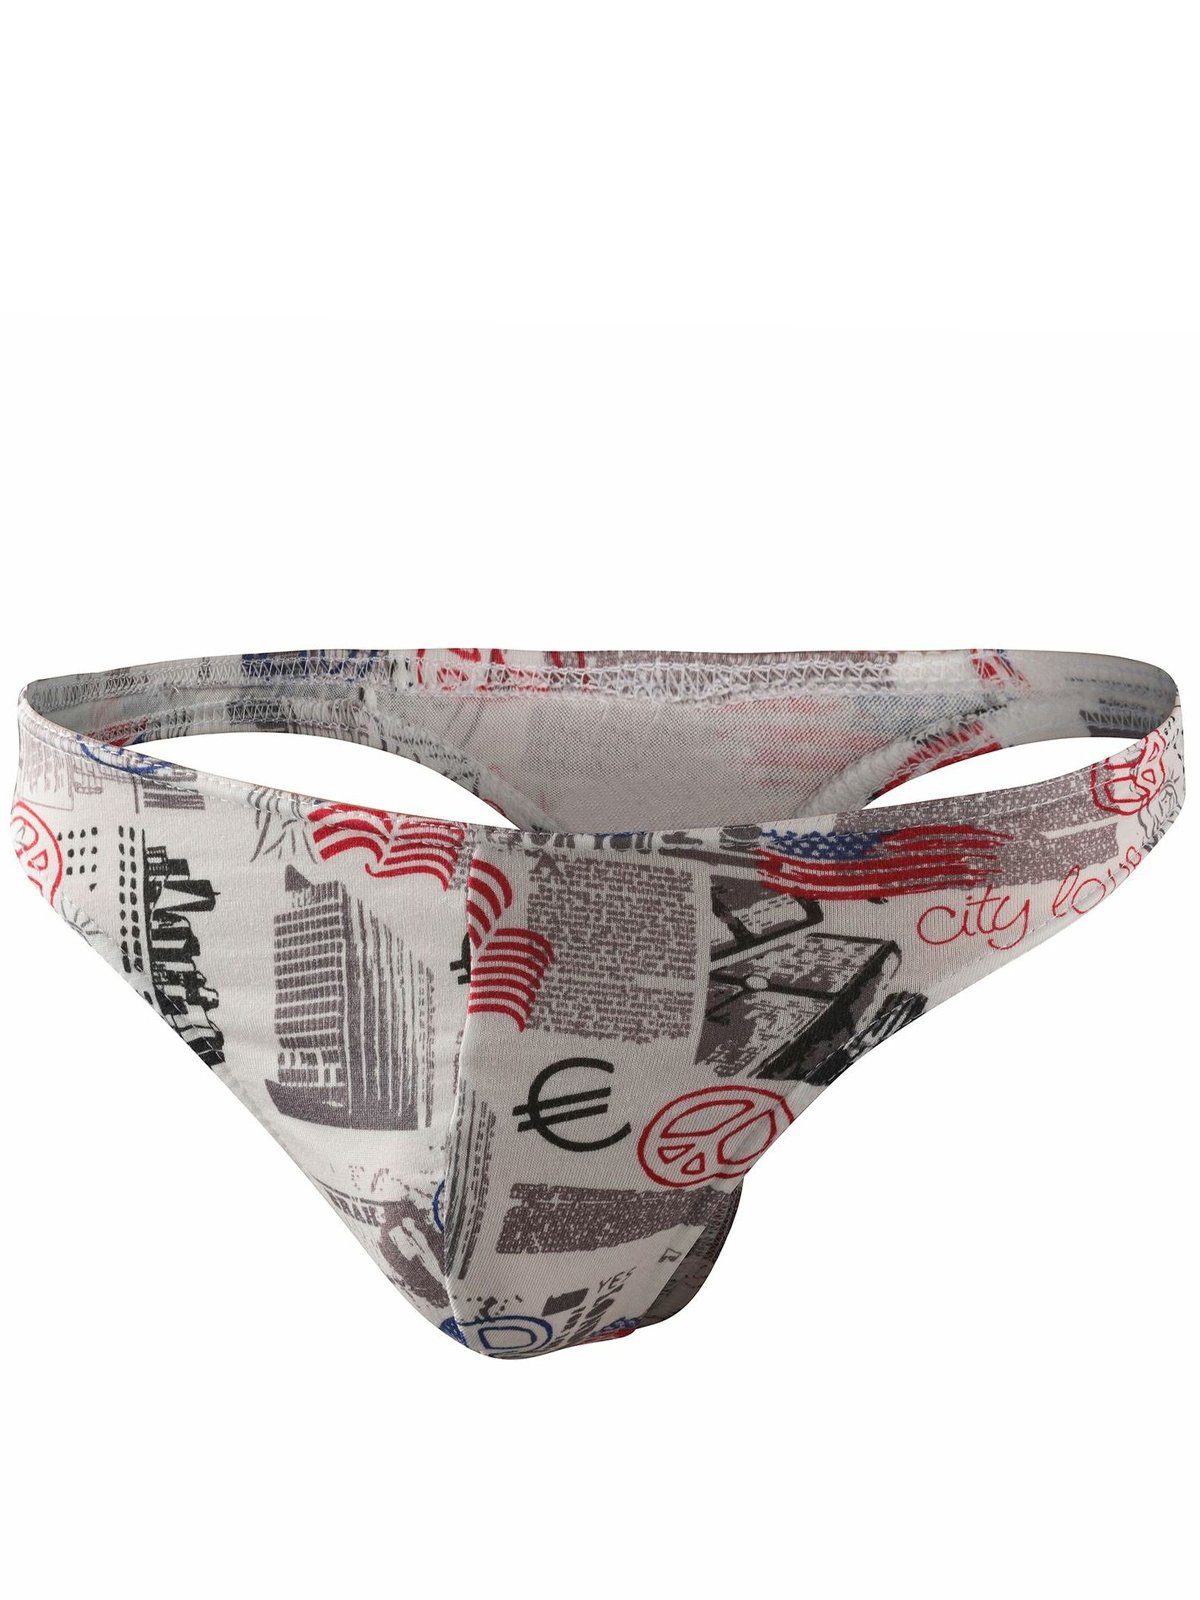 Doreanse Underwear String Imprime Freedom-1370 Kollektion Schlüpfer Rio String Herren Brasil